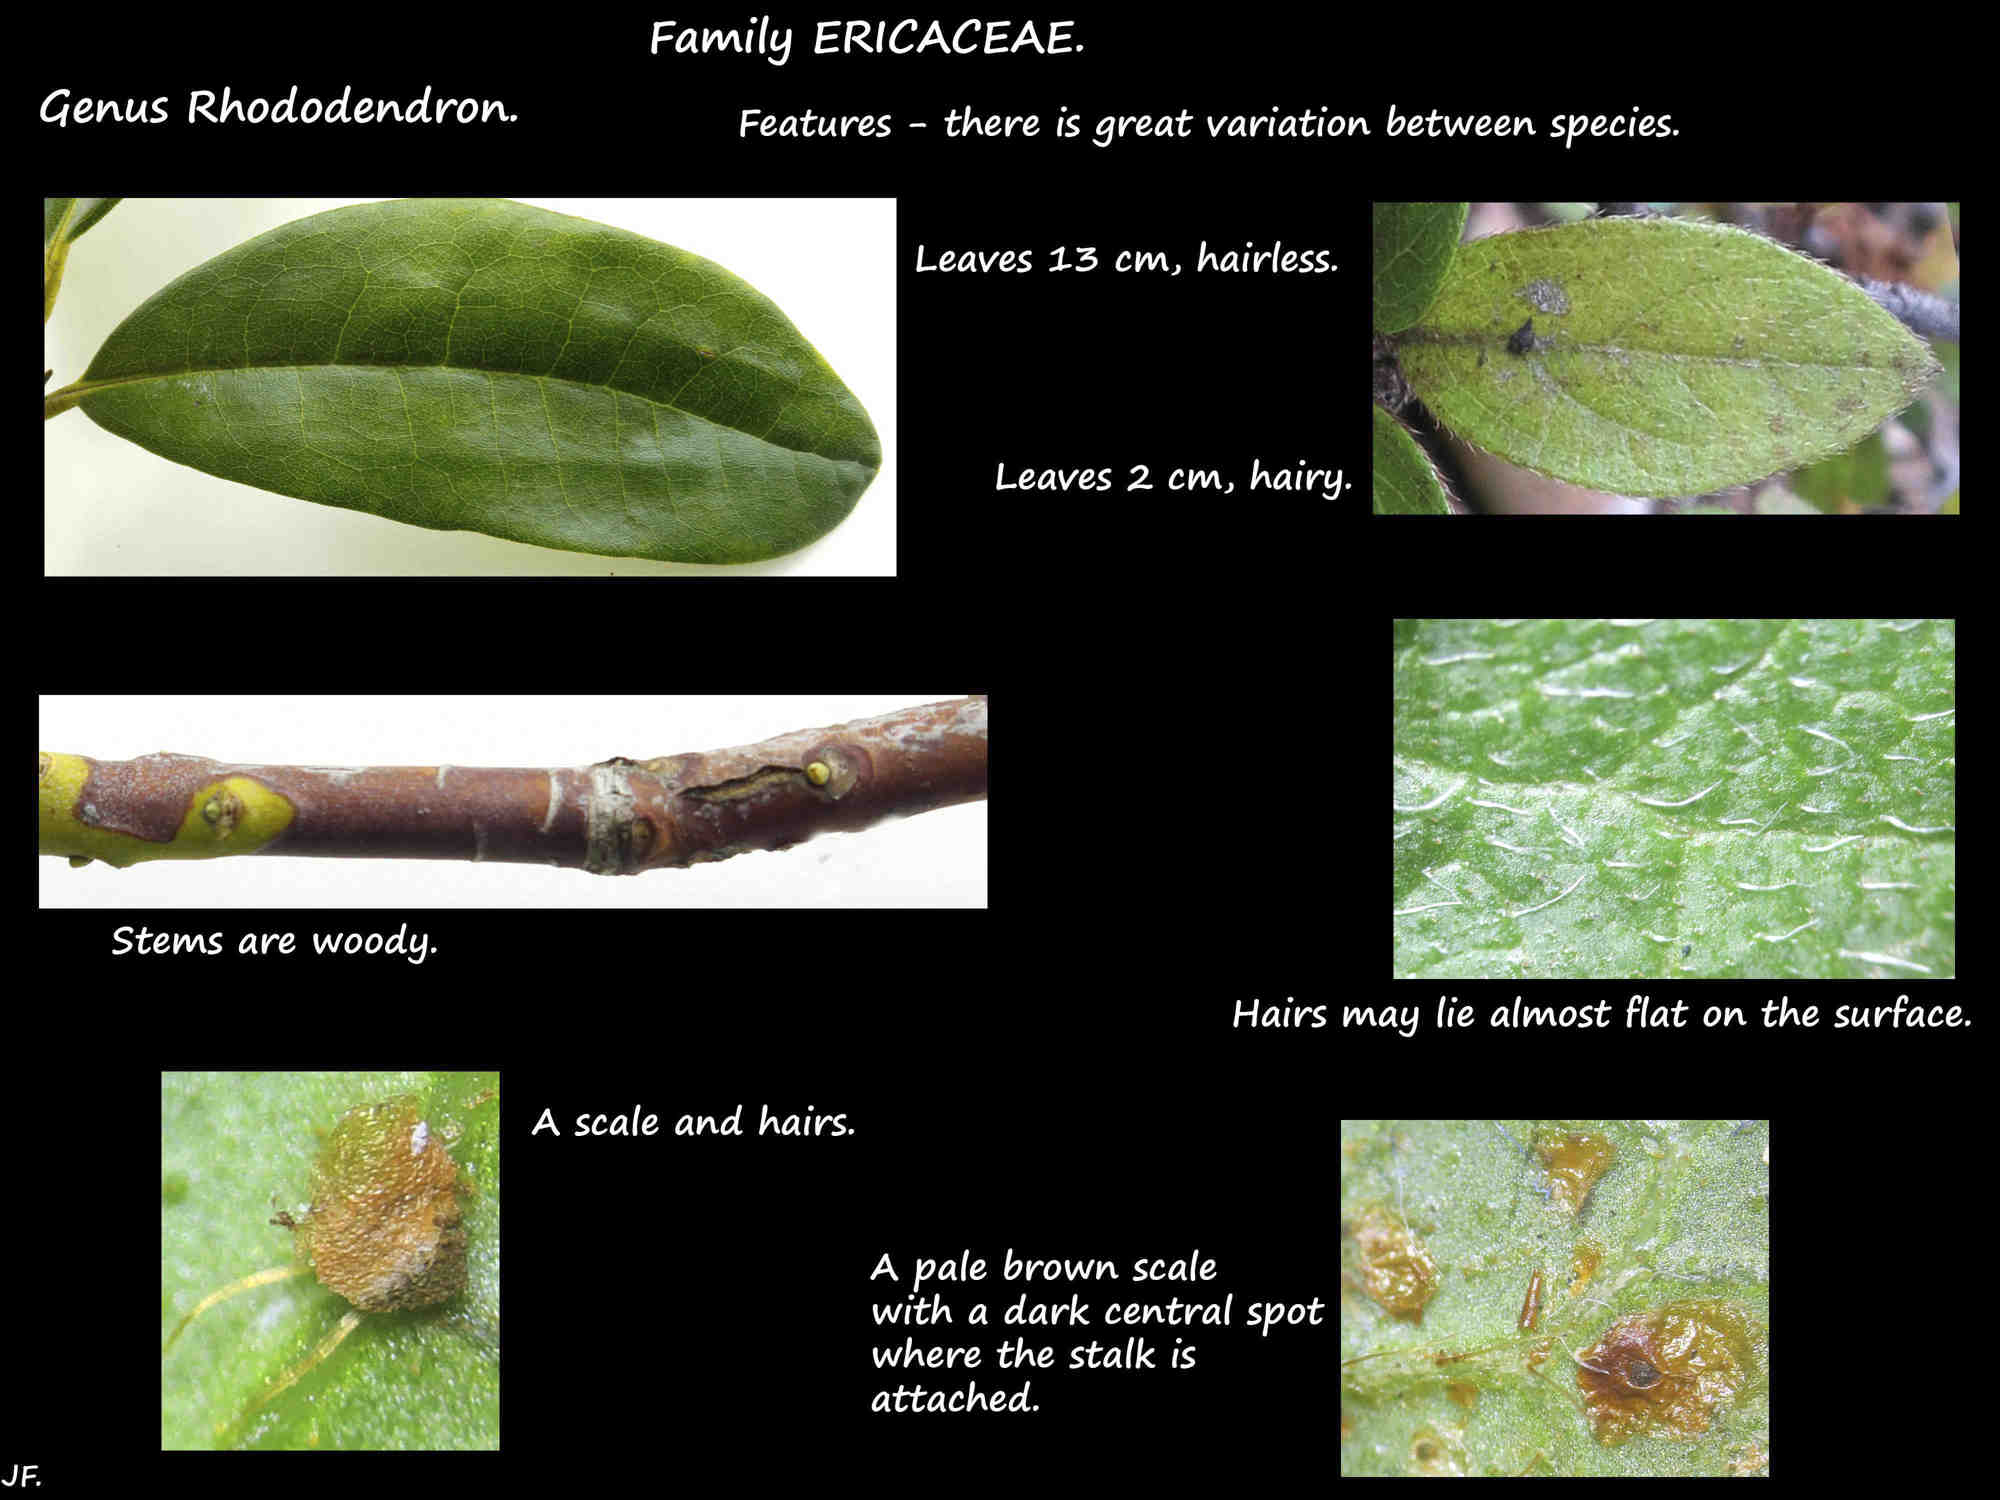 2 Azalea leaf scles & hairs